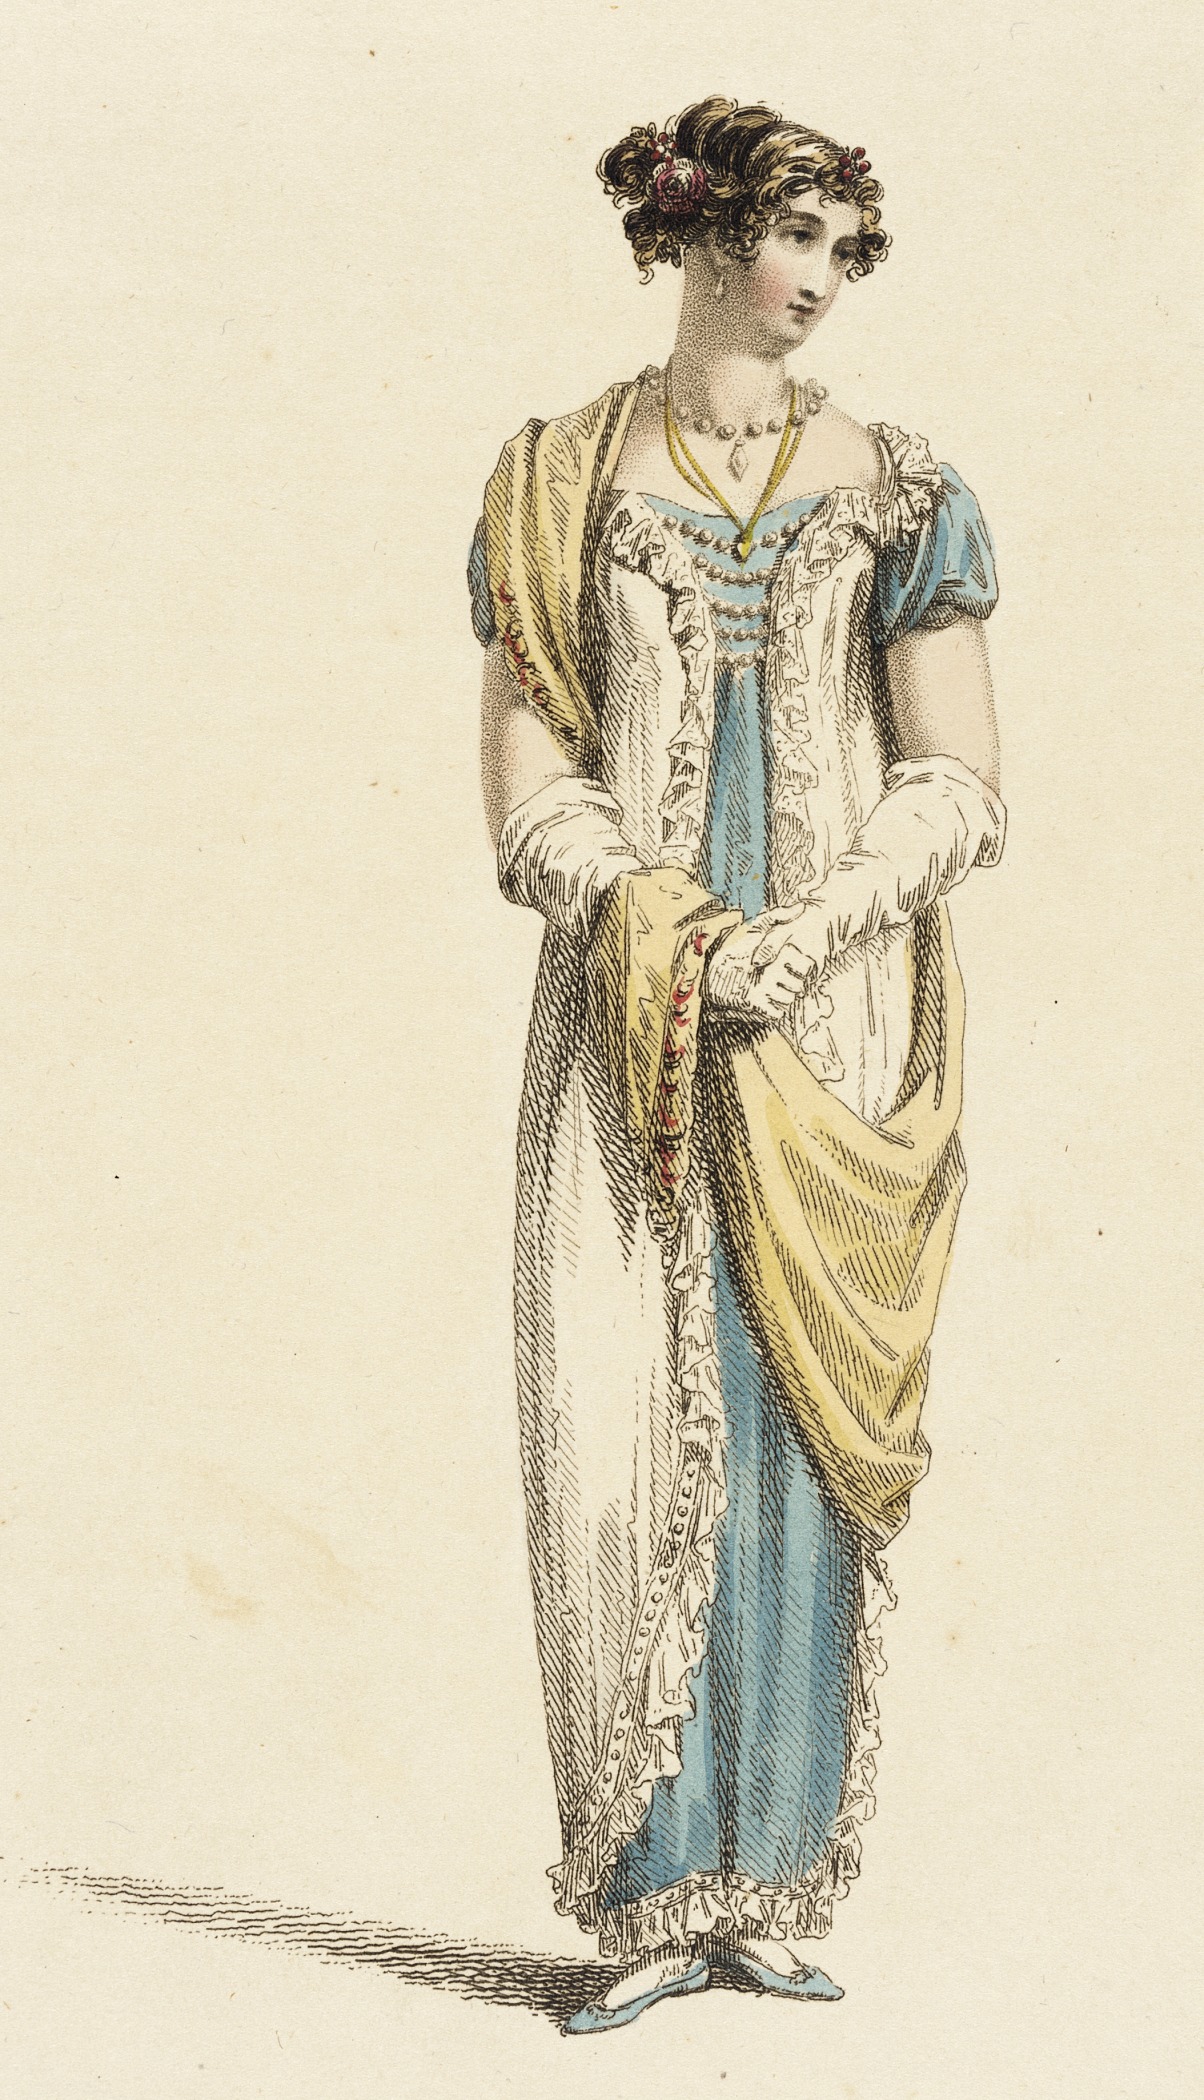 Капот женская одежда. Костюм 19 века стиль Ампир. Костюм эпохи Ампир 19 век. Женский костюм стиля Ампир 19 век. Ампир одежда женская 19 века.